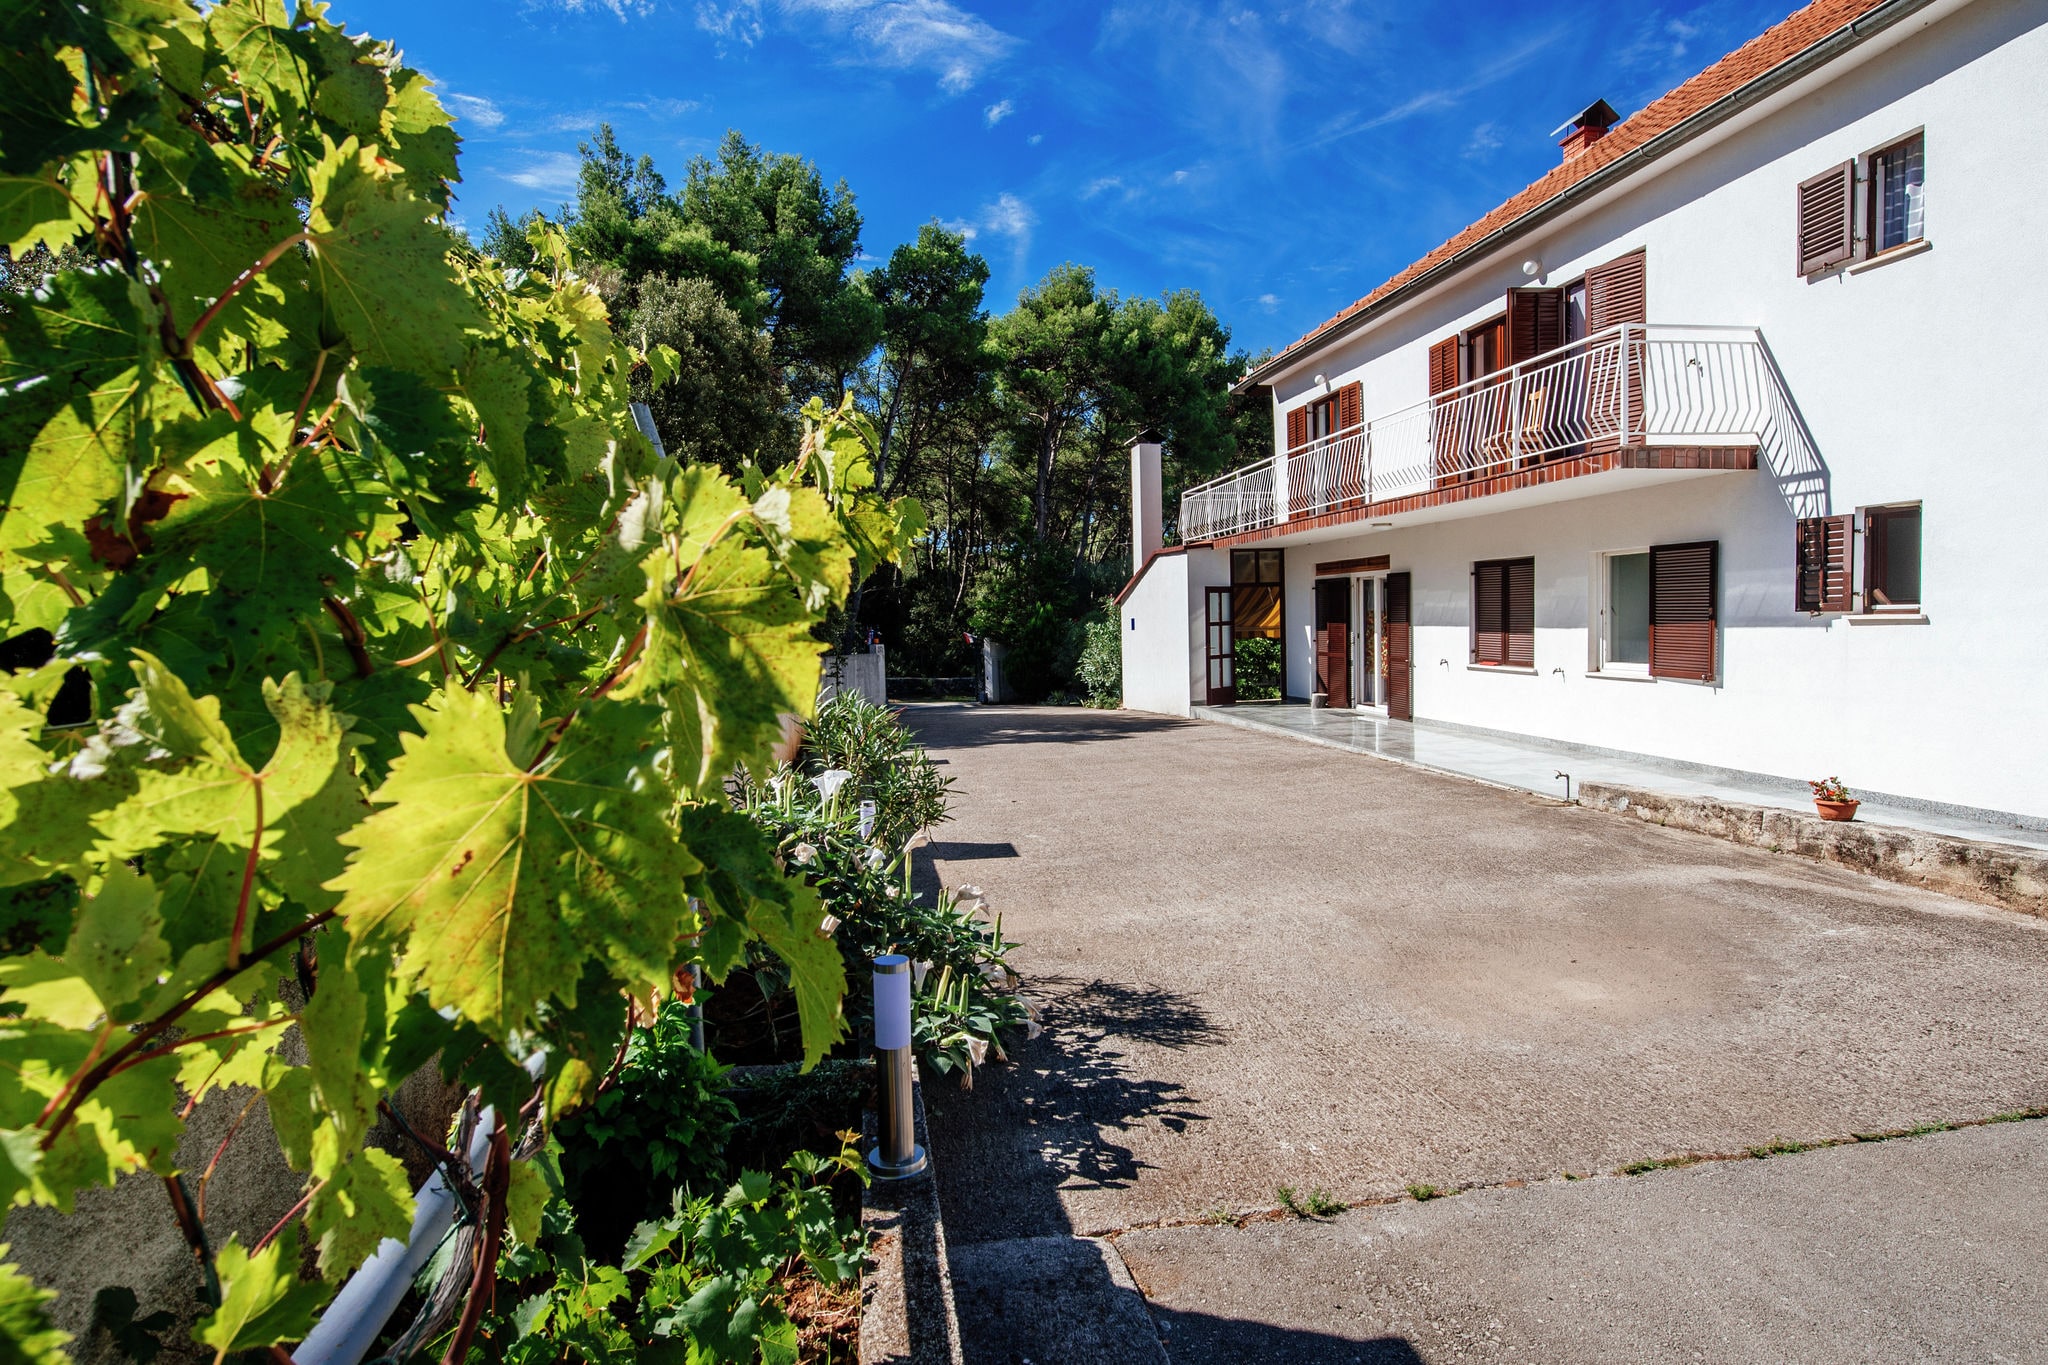 Modern Apartment in Dalmatia with Terrace